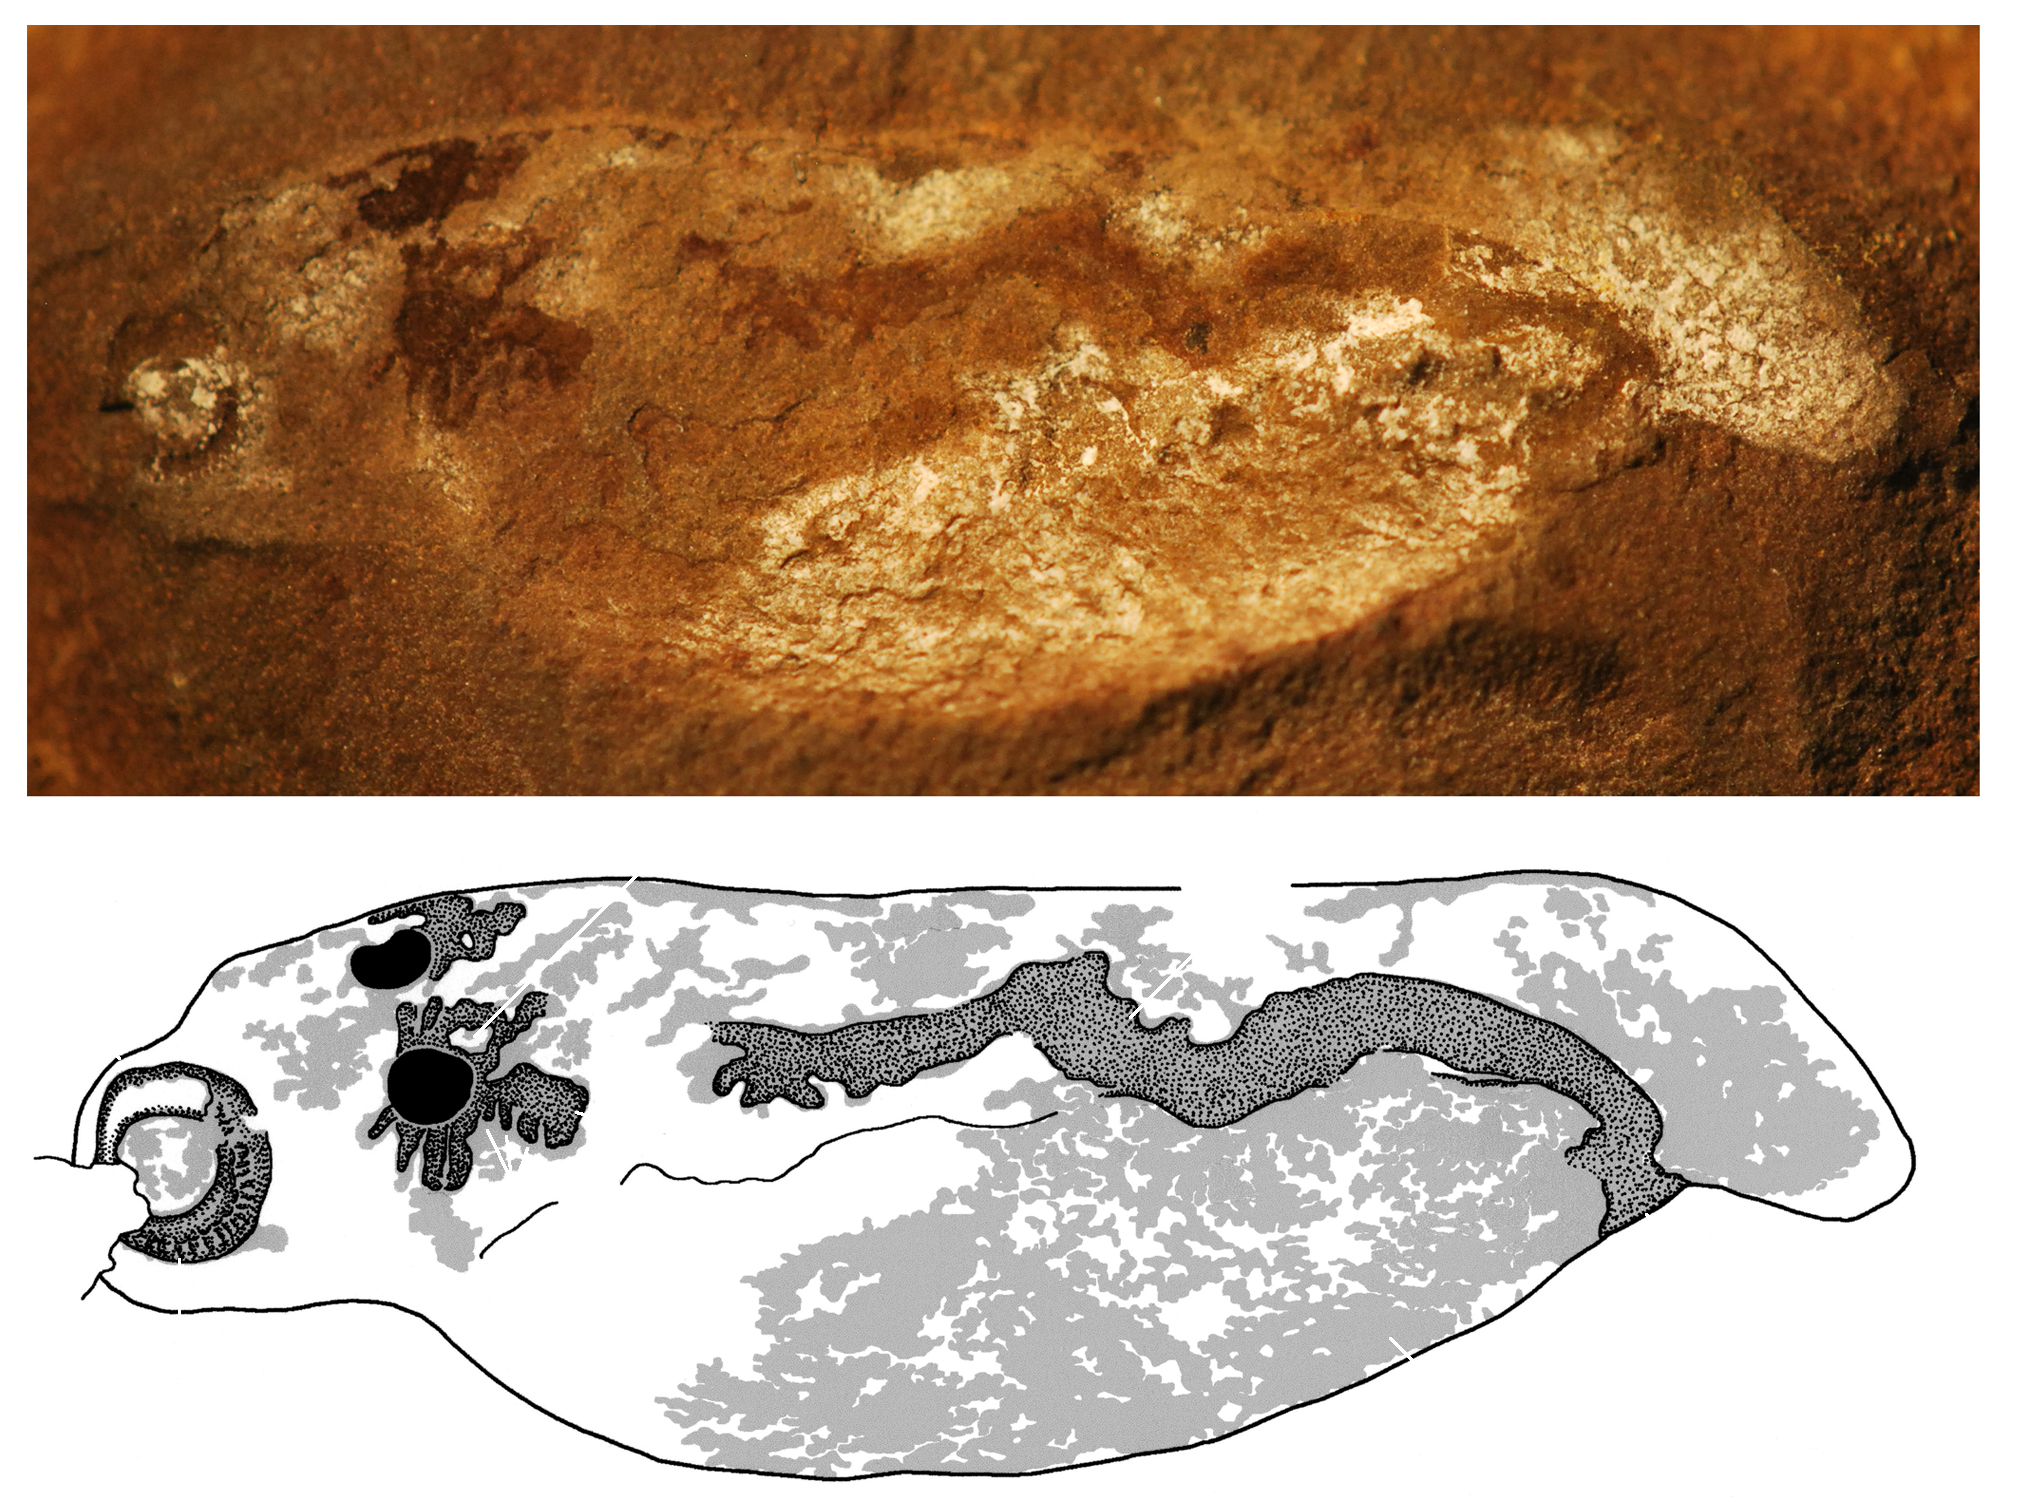 A 309 million-year-old fossil hatchling of Pipiscius zangerli, an extinct lamprey species. (Image: Tetsuto Miyashita)